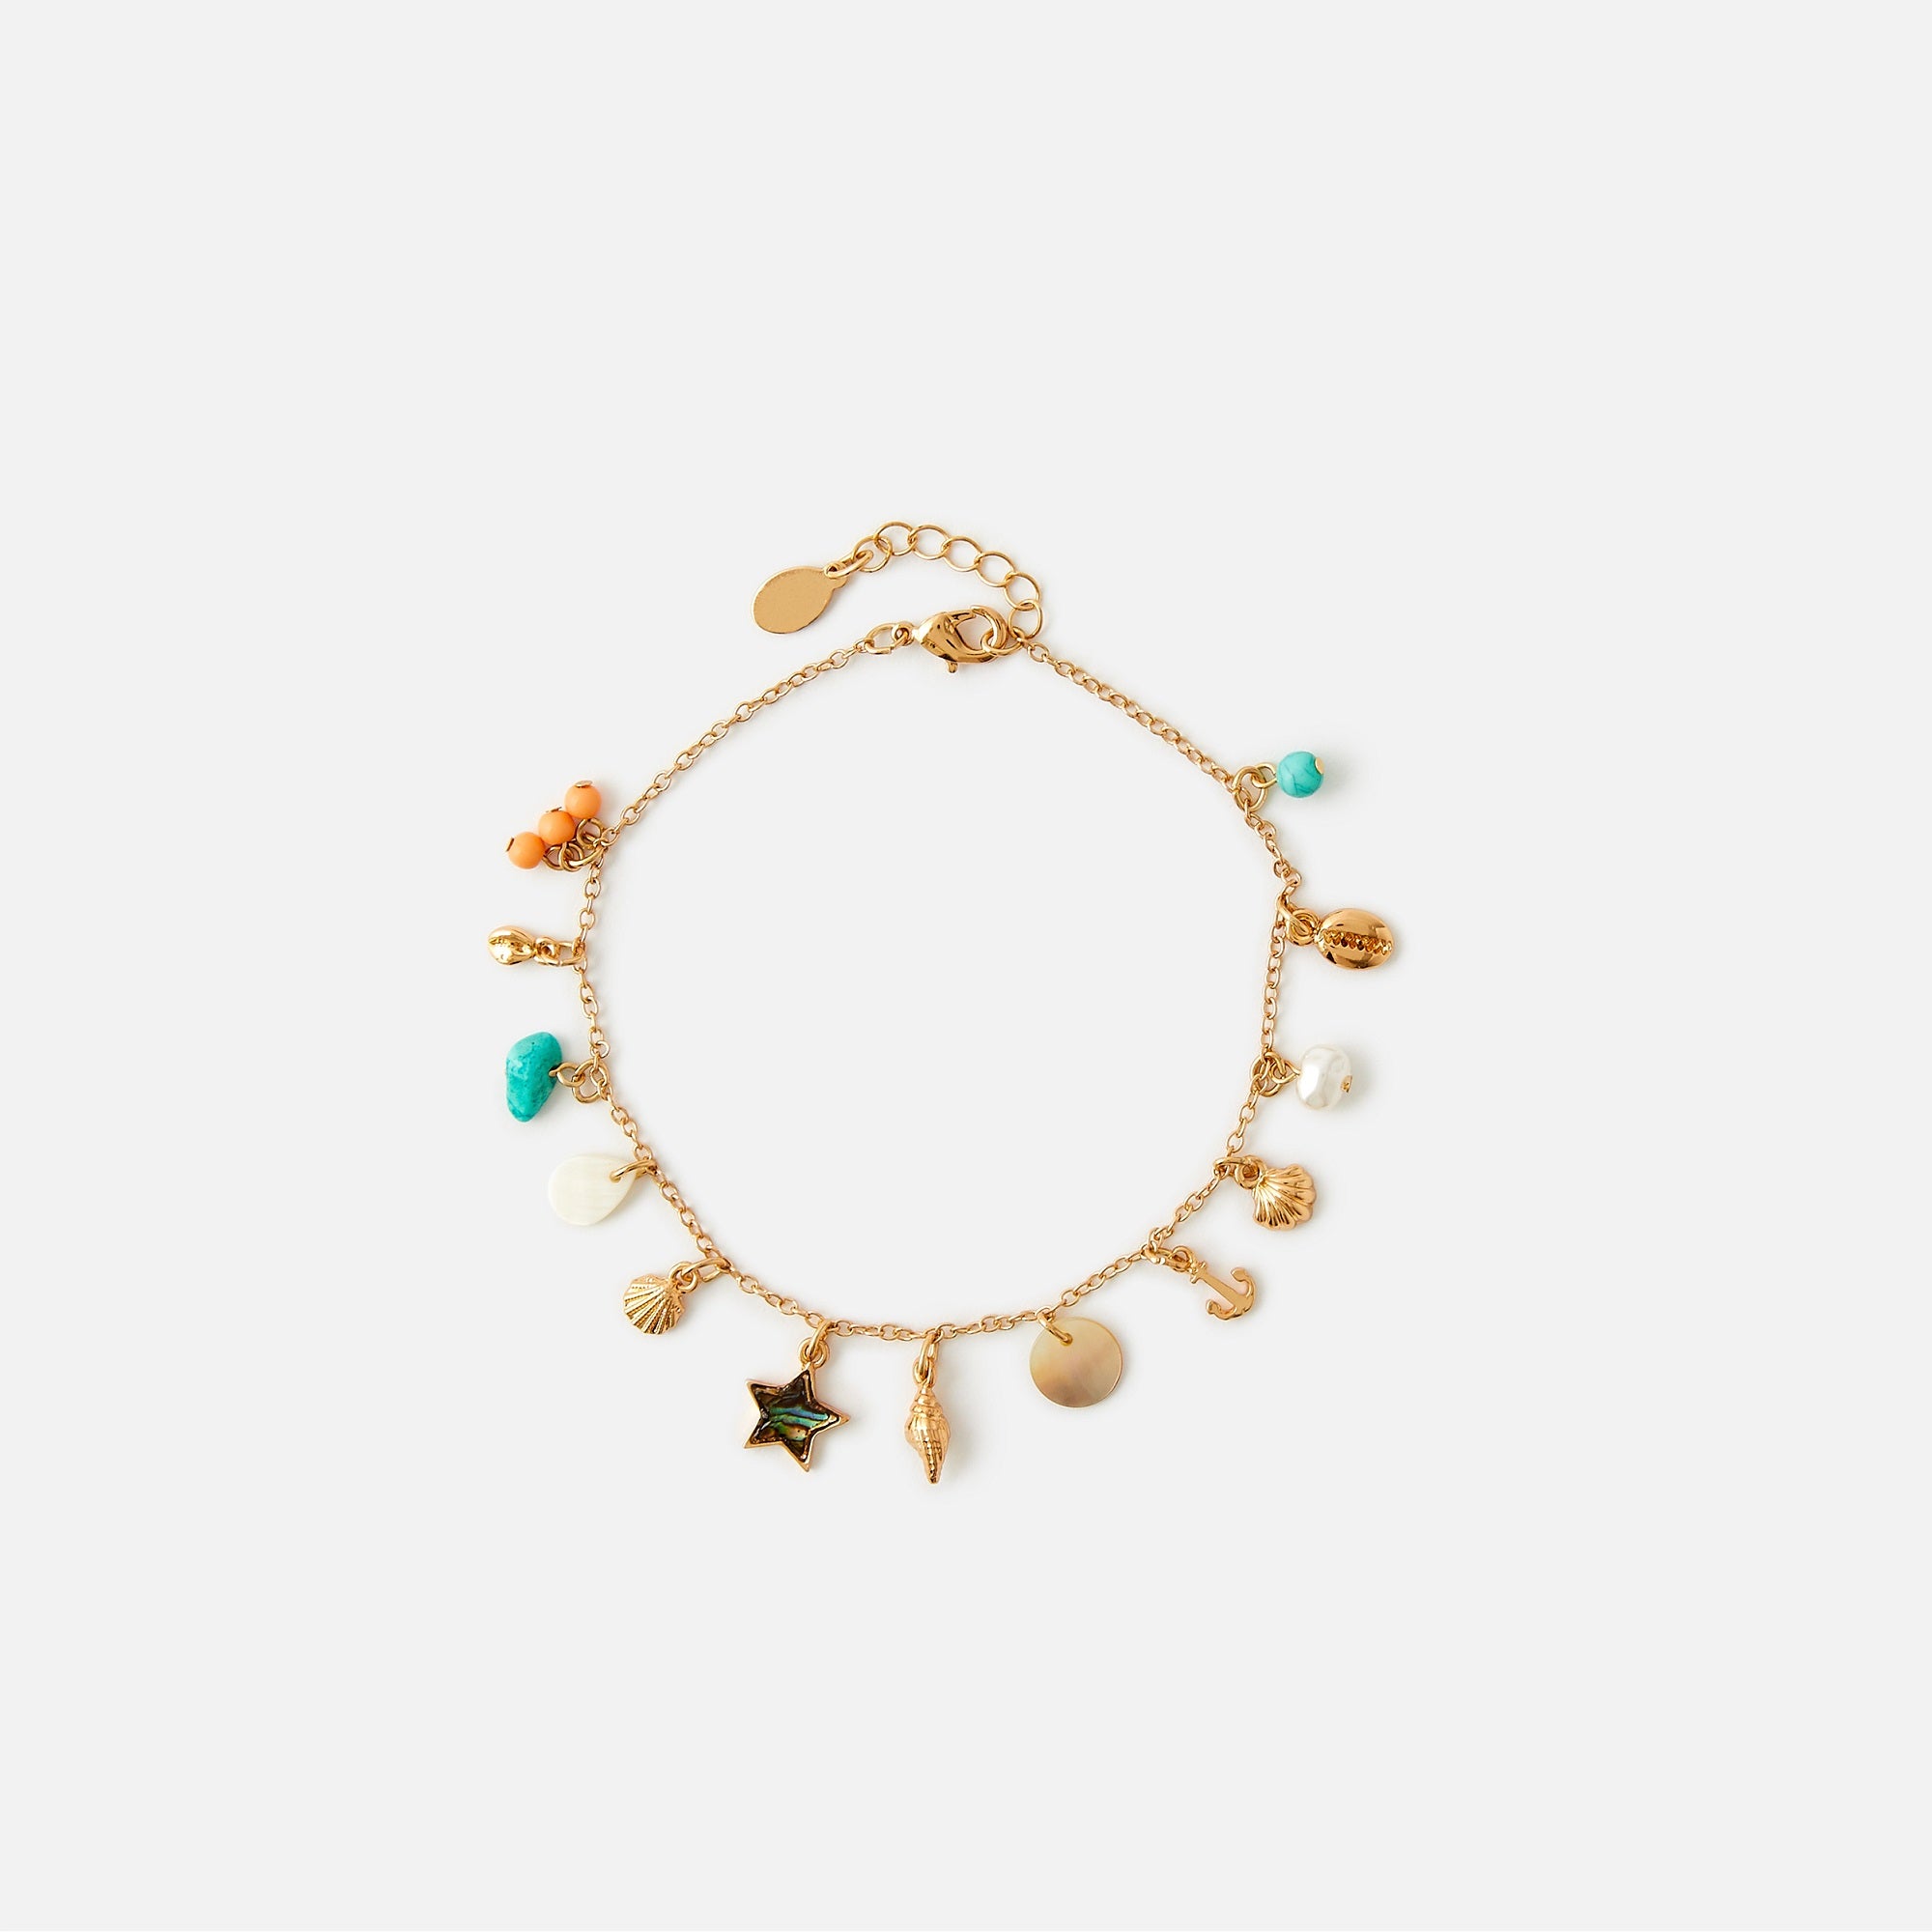 Modicare Amoli Jewelry Collection | Bracelets, Earrings